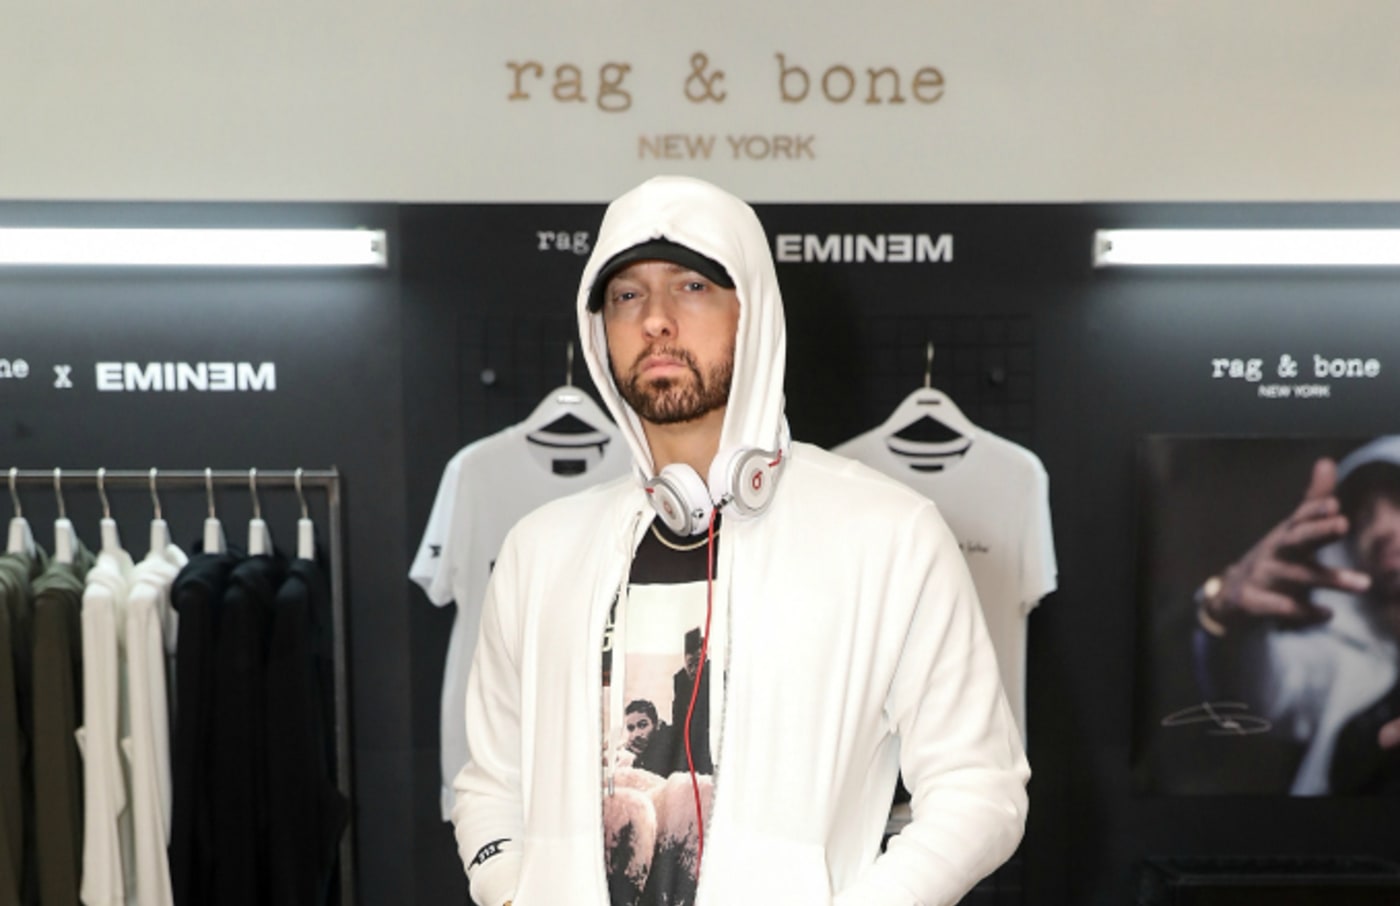 Eminem attends the rag & bone X Eminem London Pop Up